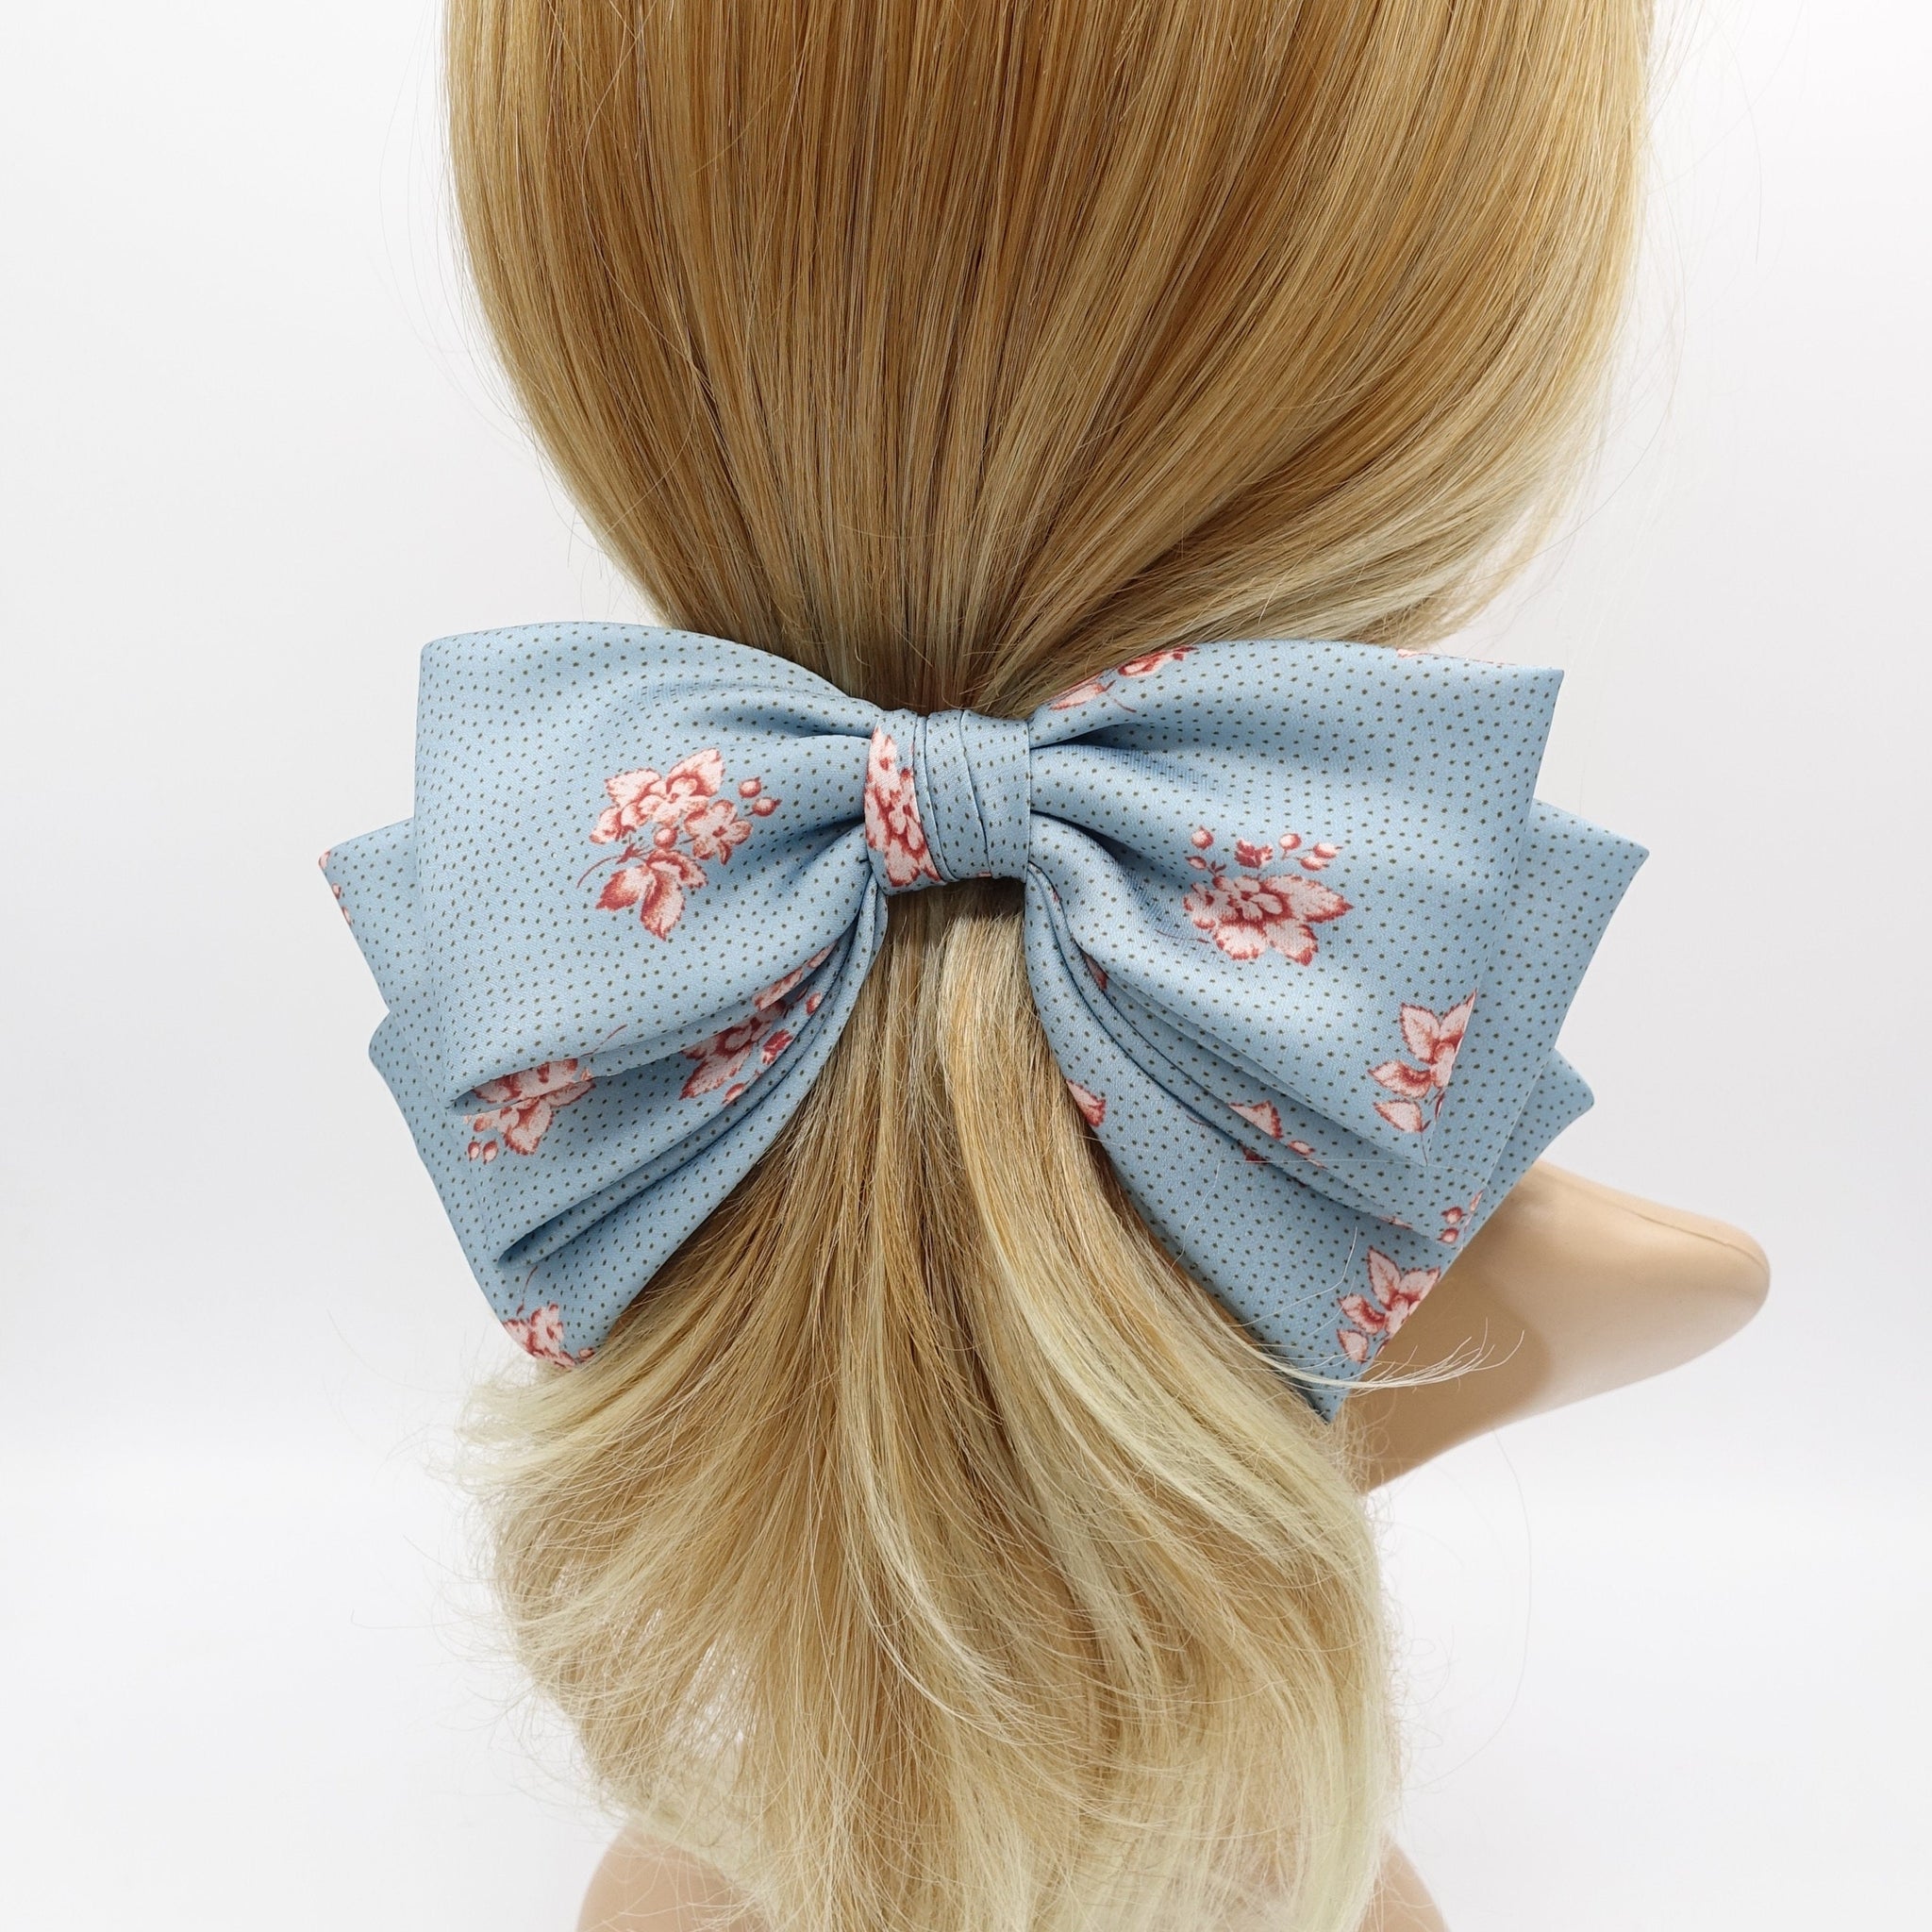 veryshine.com Barrette (Bow) Blue floral satin hair bow